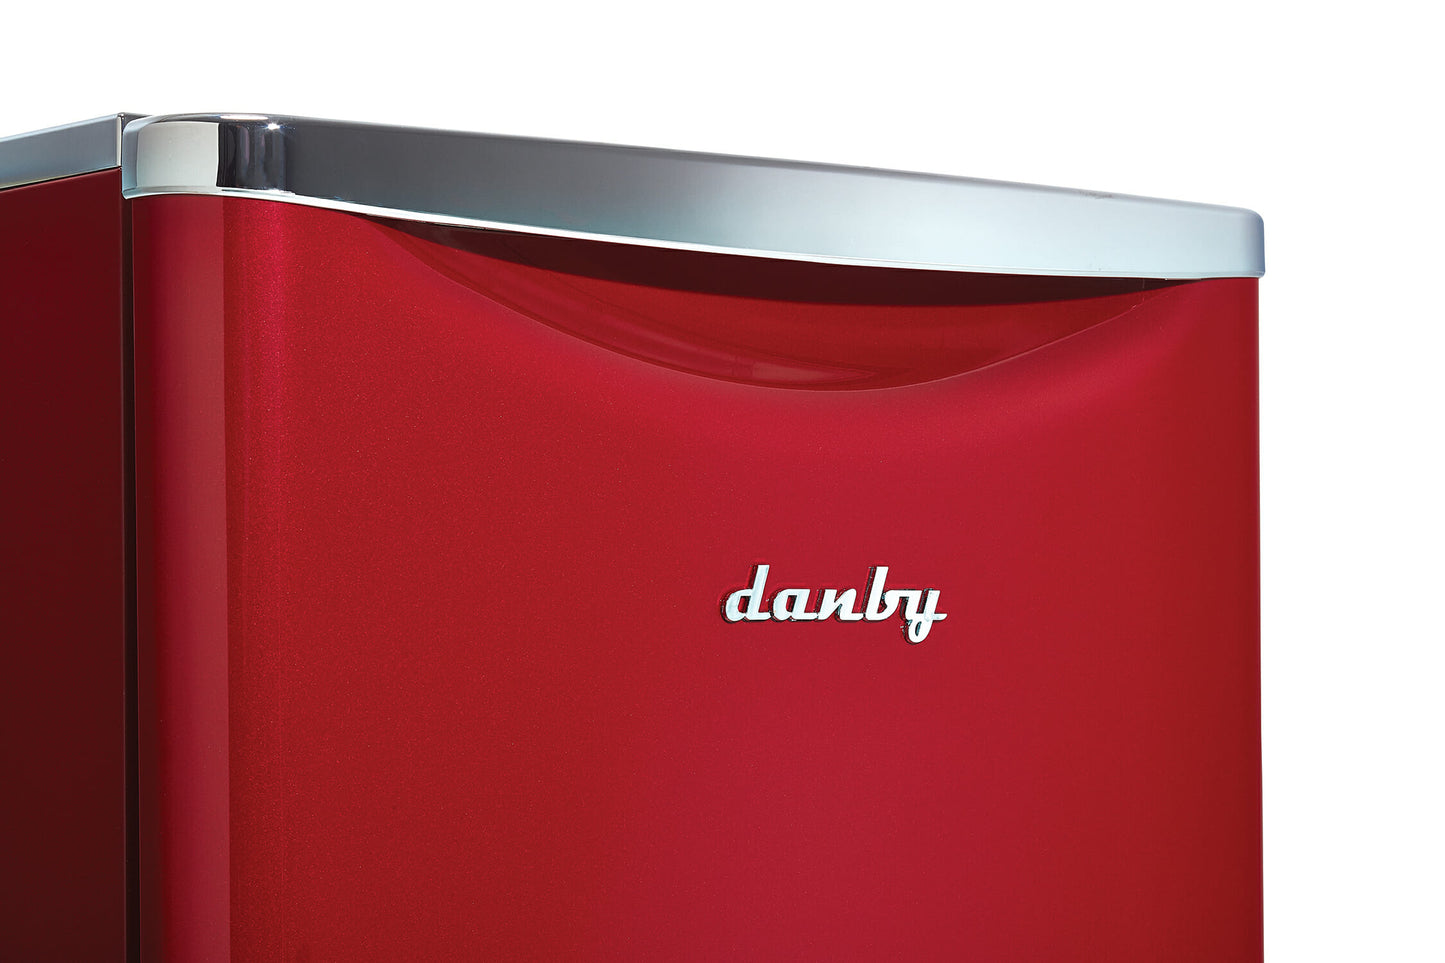 Danby 4.4 cu. ft. Contemporary Classic Compact Fridge in Metallic Red - DAR044A6LDB